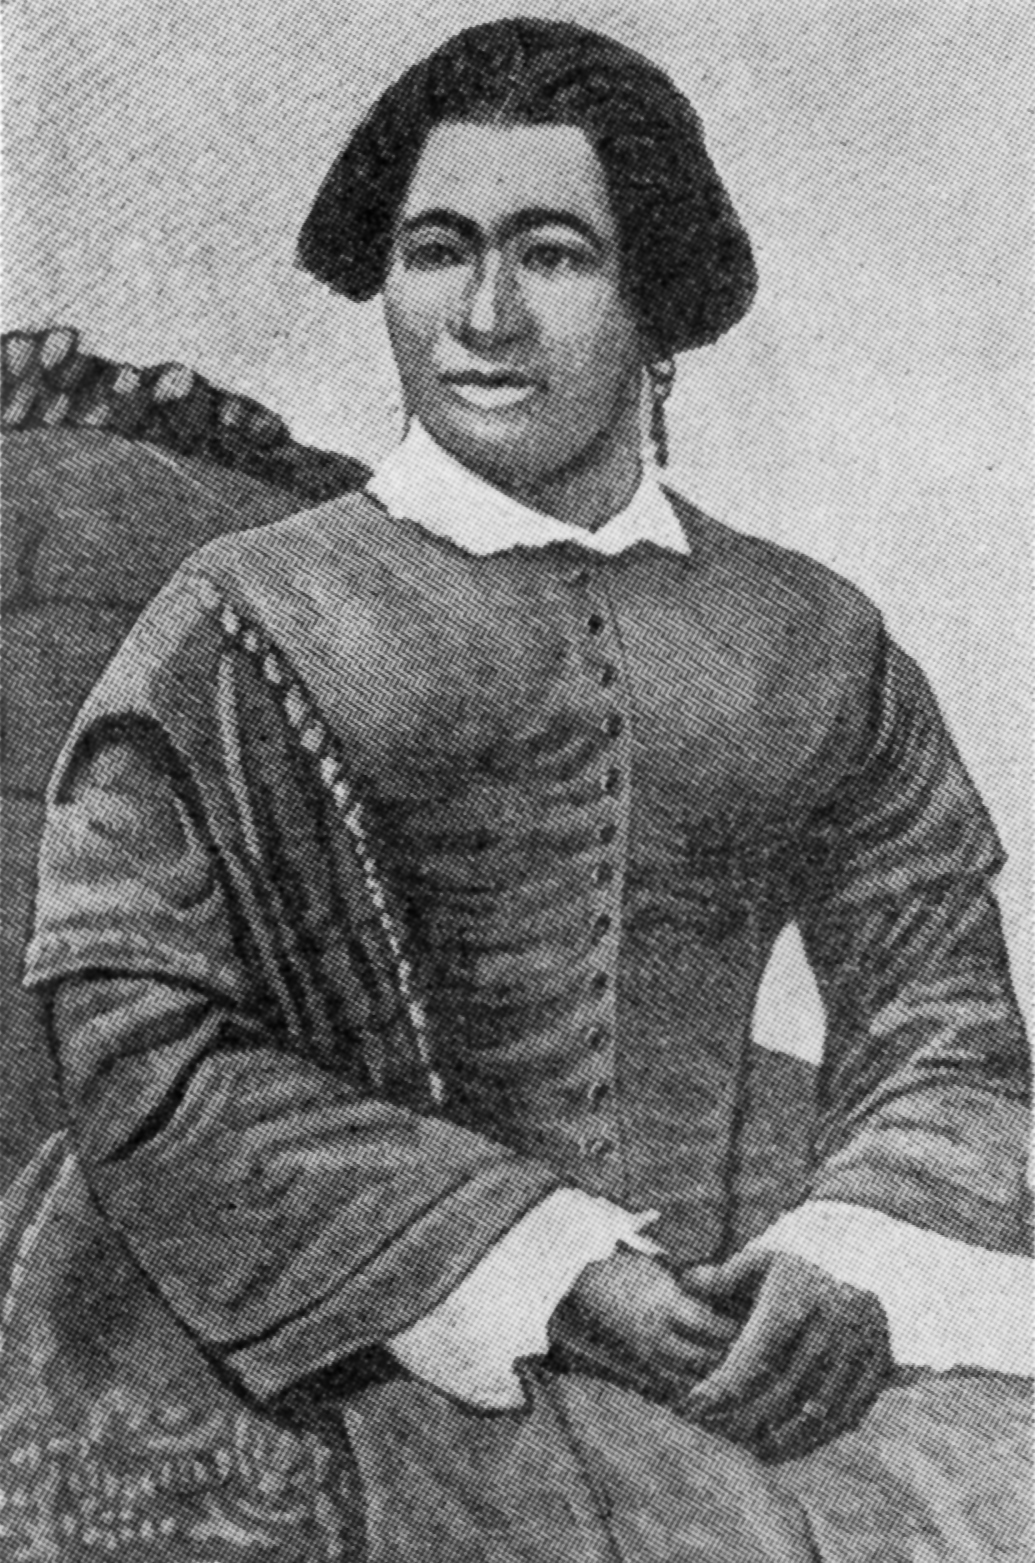 portrait of Elizabeth Taylor Greenfield